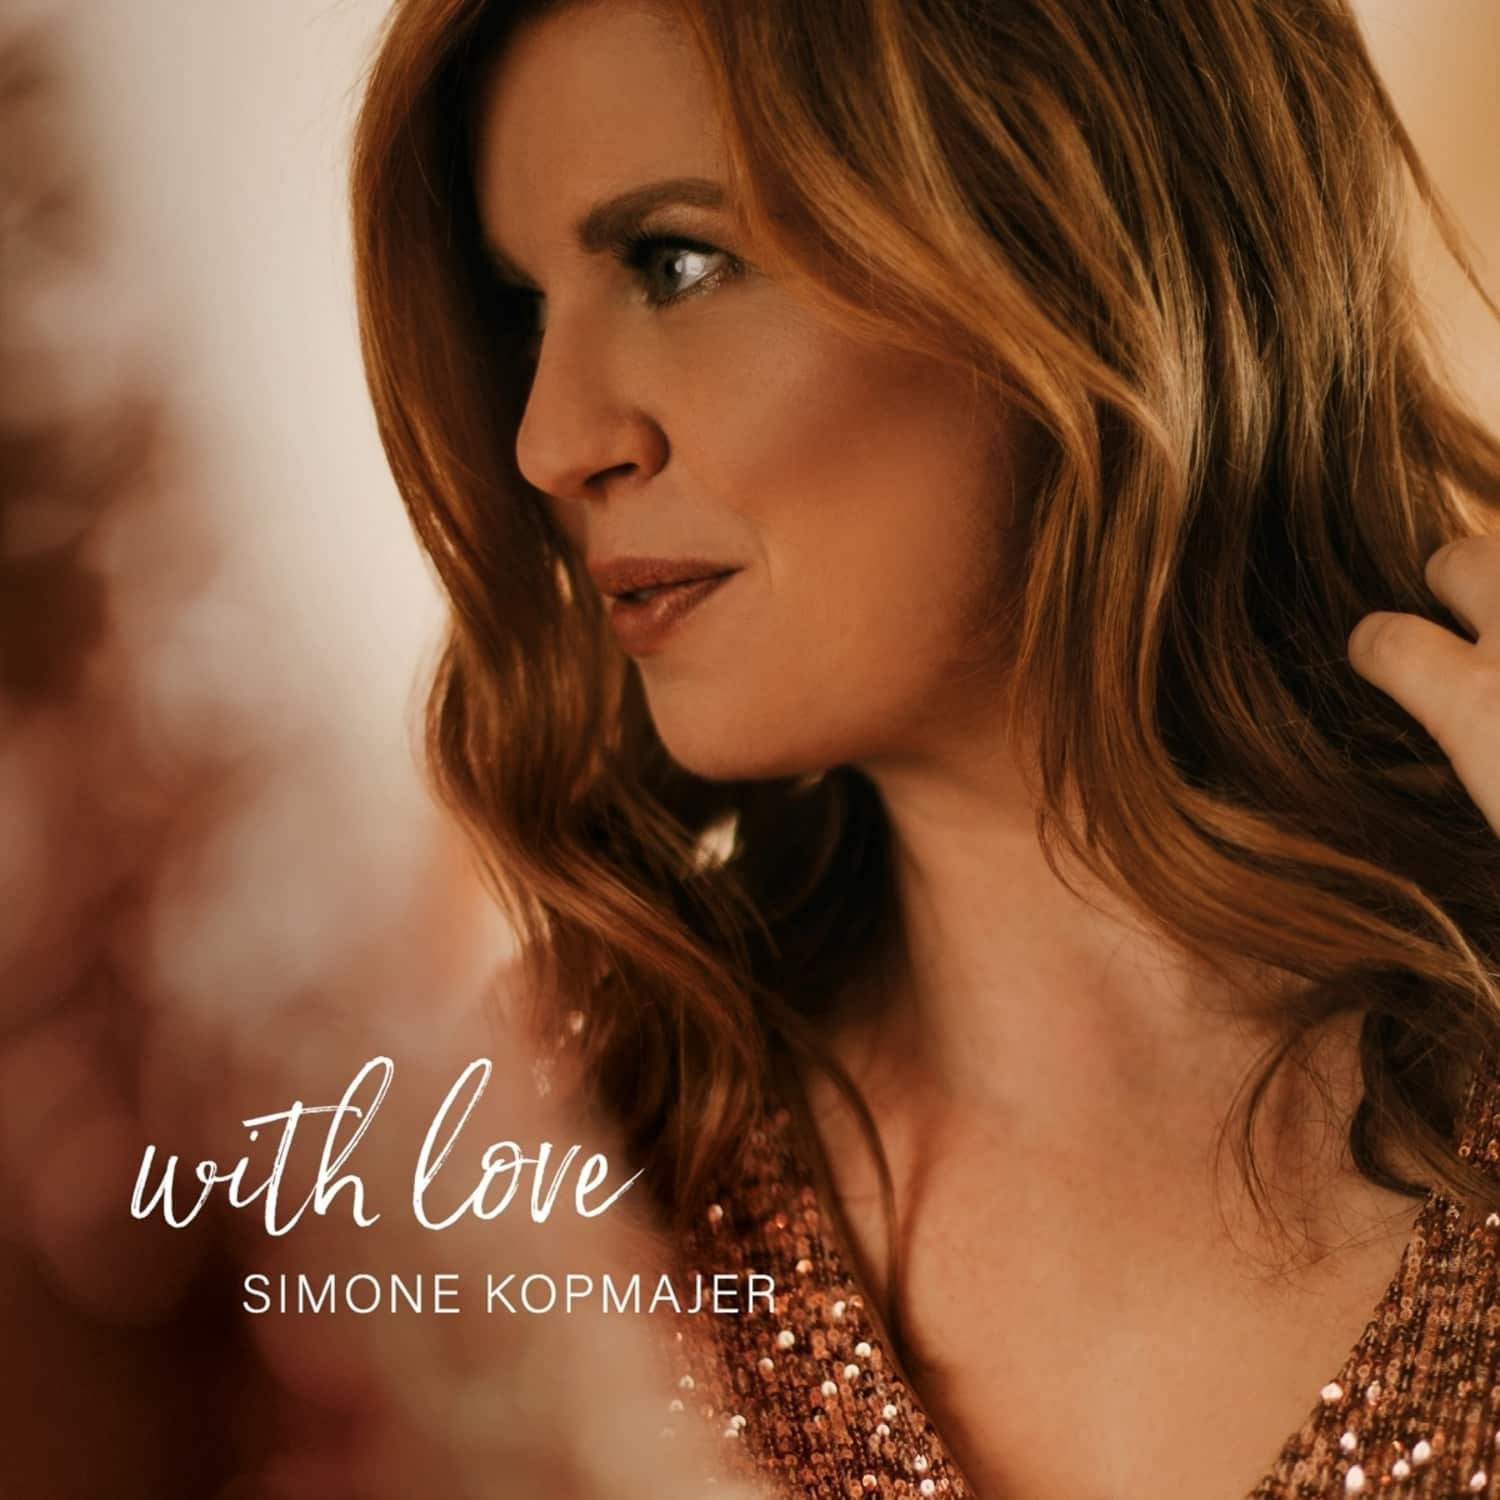  Simone Kopmajer - WITH LOVE 